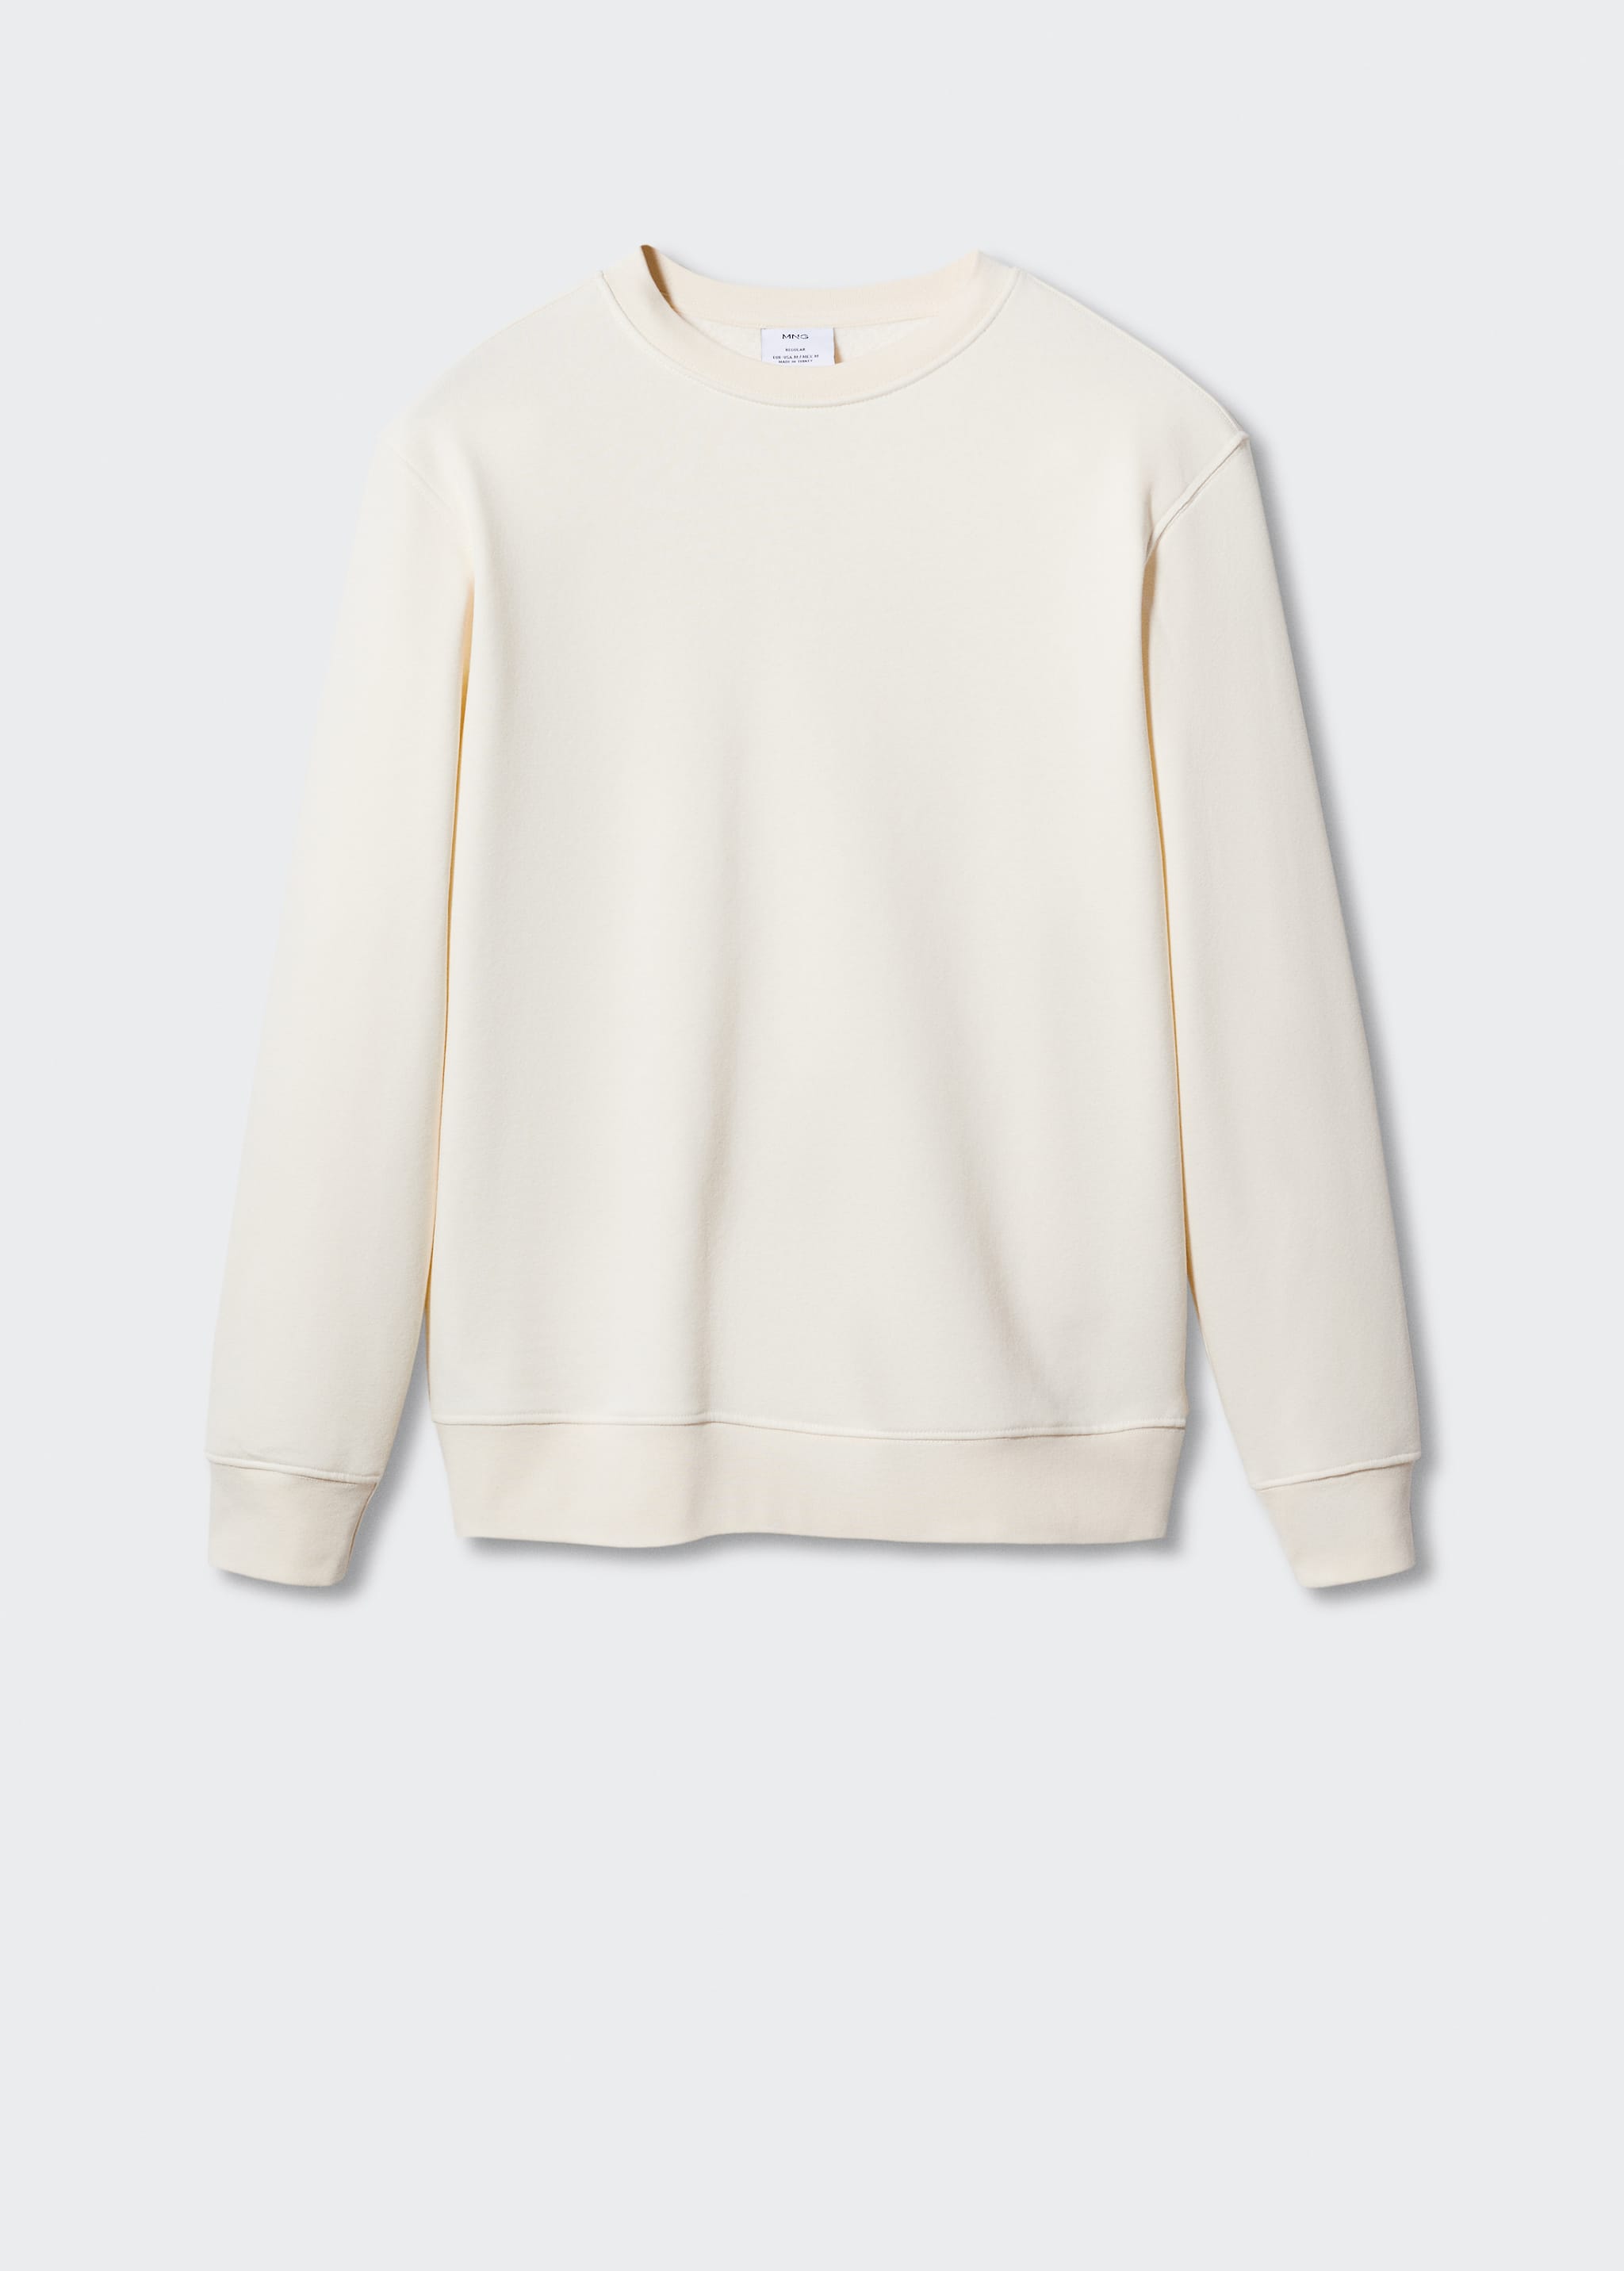 Plush cotton sweatshirt - Article without model